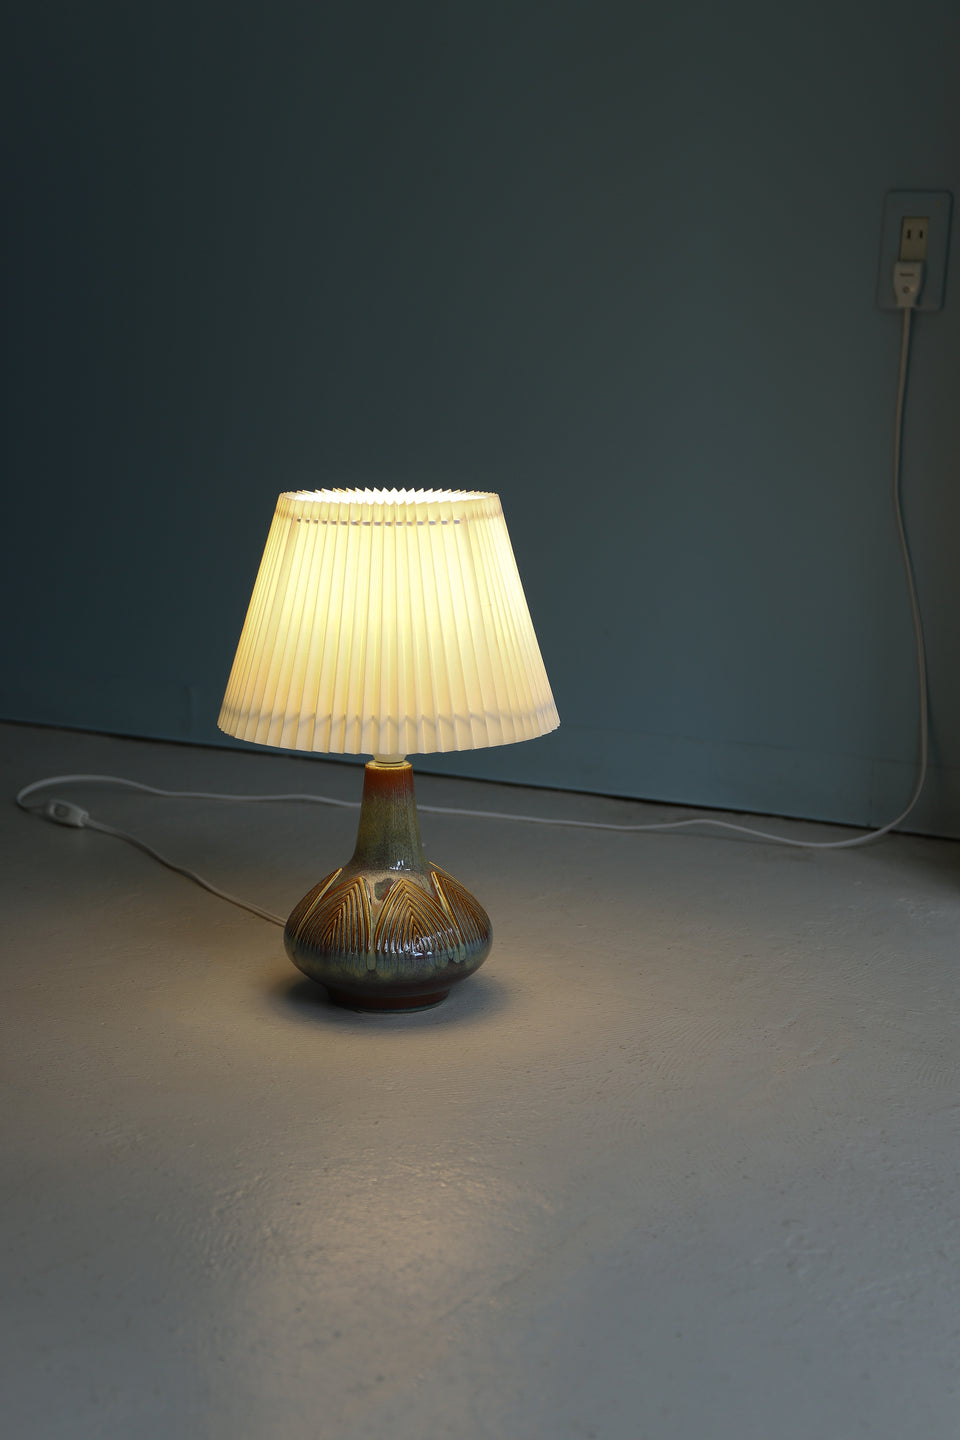 Søholm Table Lamp Model 1026 Einar Johansen Danish Vintage/デンマークヴィンテージ スーホルム テーブルランプ エイナー・ヨハンセン  関節照明 北欧インテリア